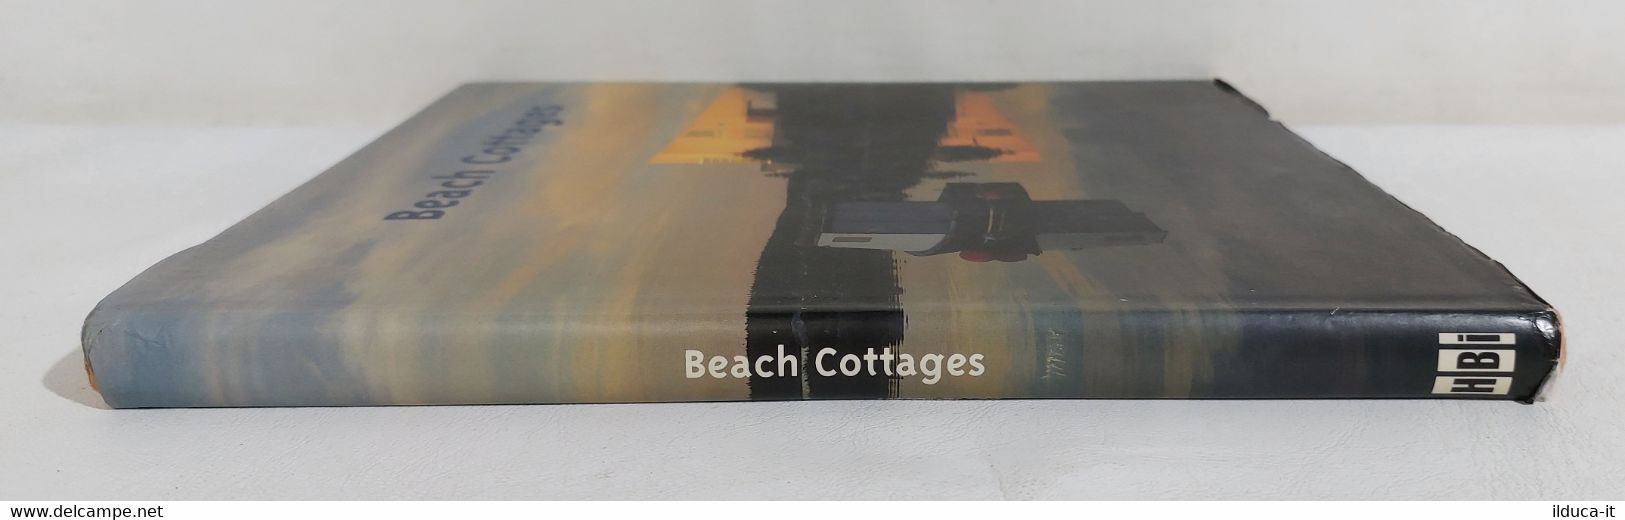 I109789 V BEACH COTTAGES - Loft 2002 - Architettura